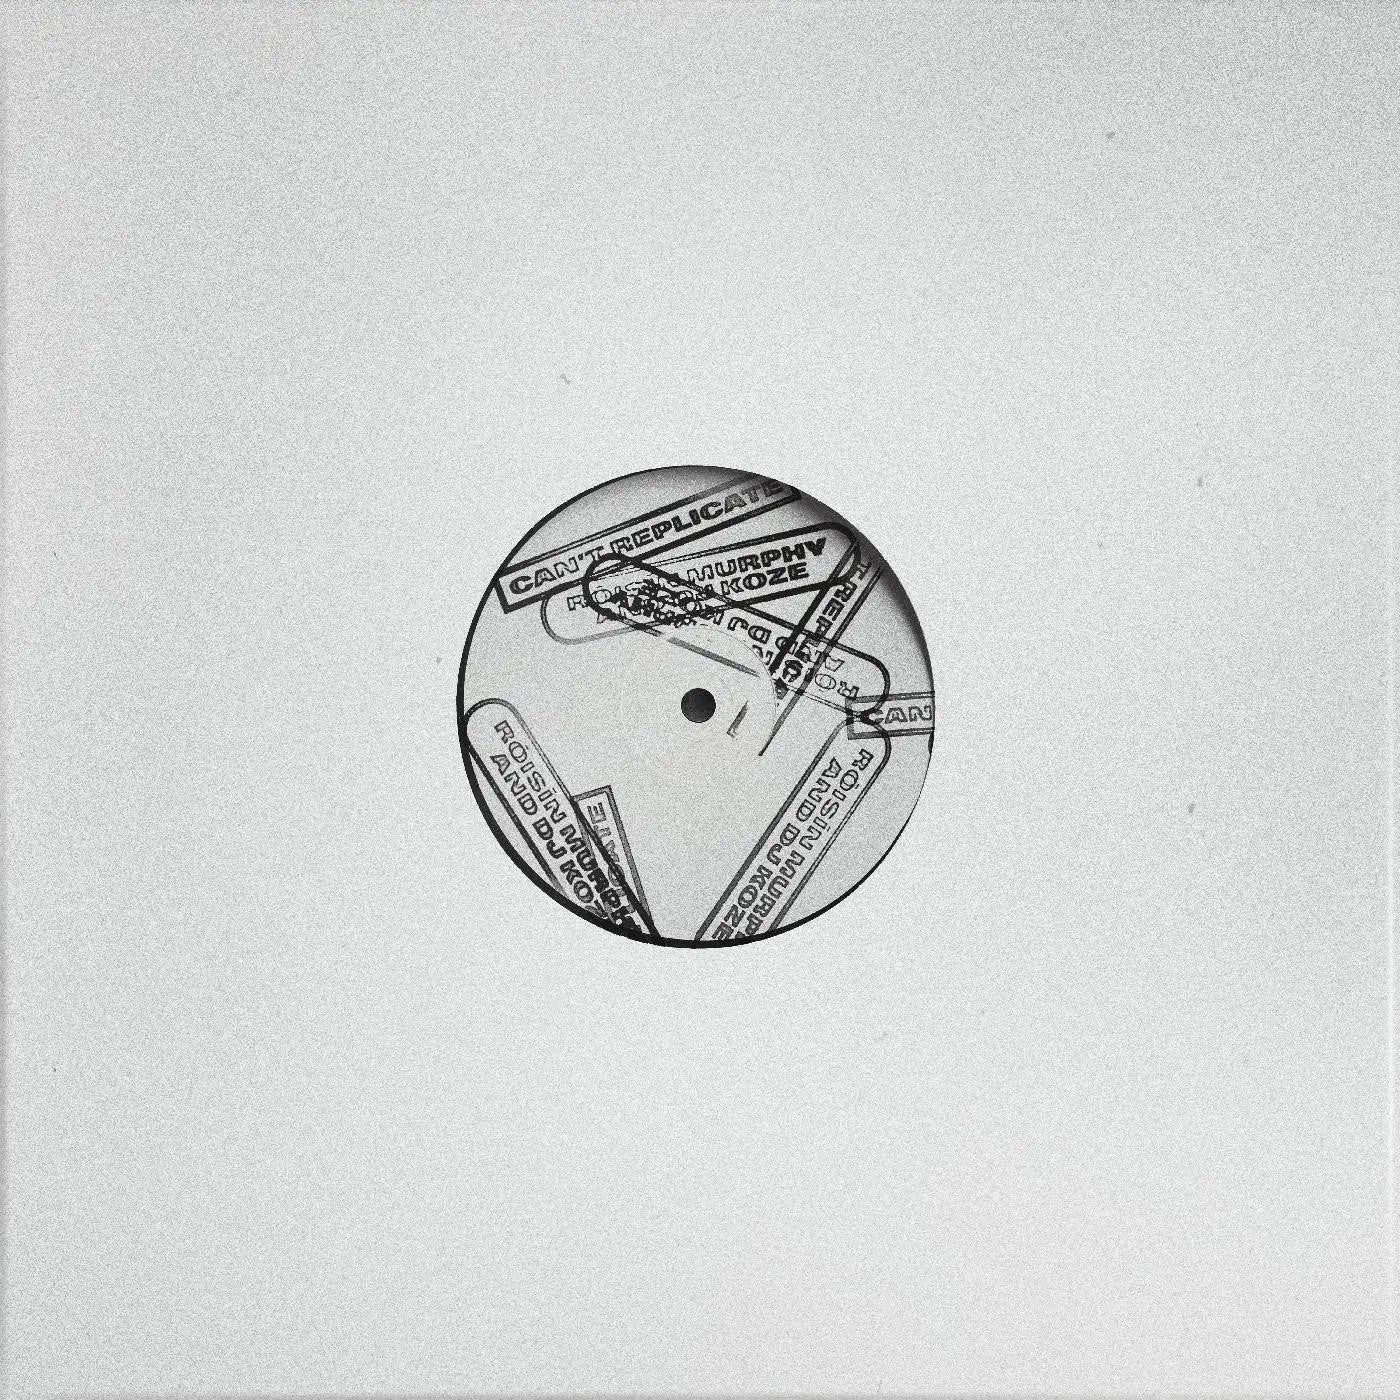 Róisín Murphy & DJ Koze - Can't Replicate (Edit) [12" Vinyl Single Center Label Hand-Stamped]